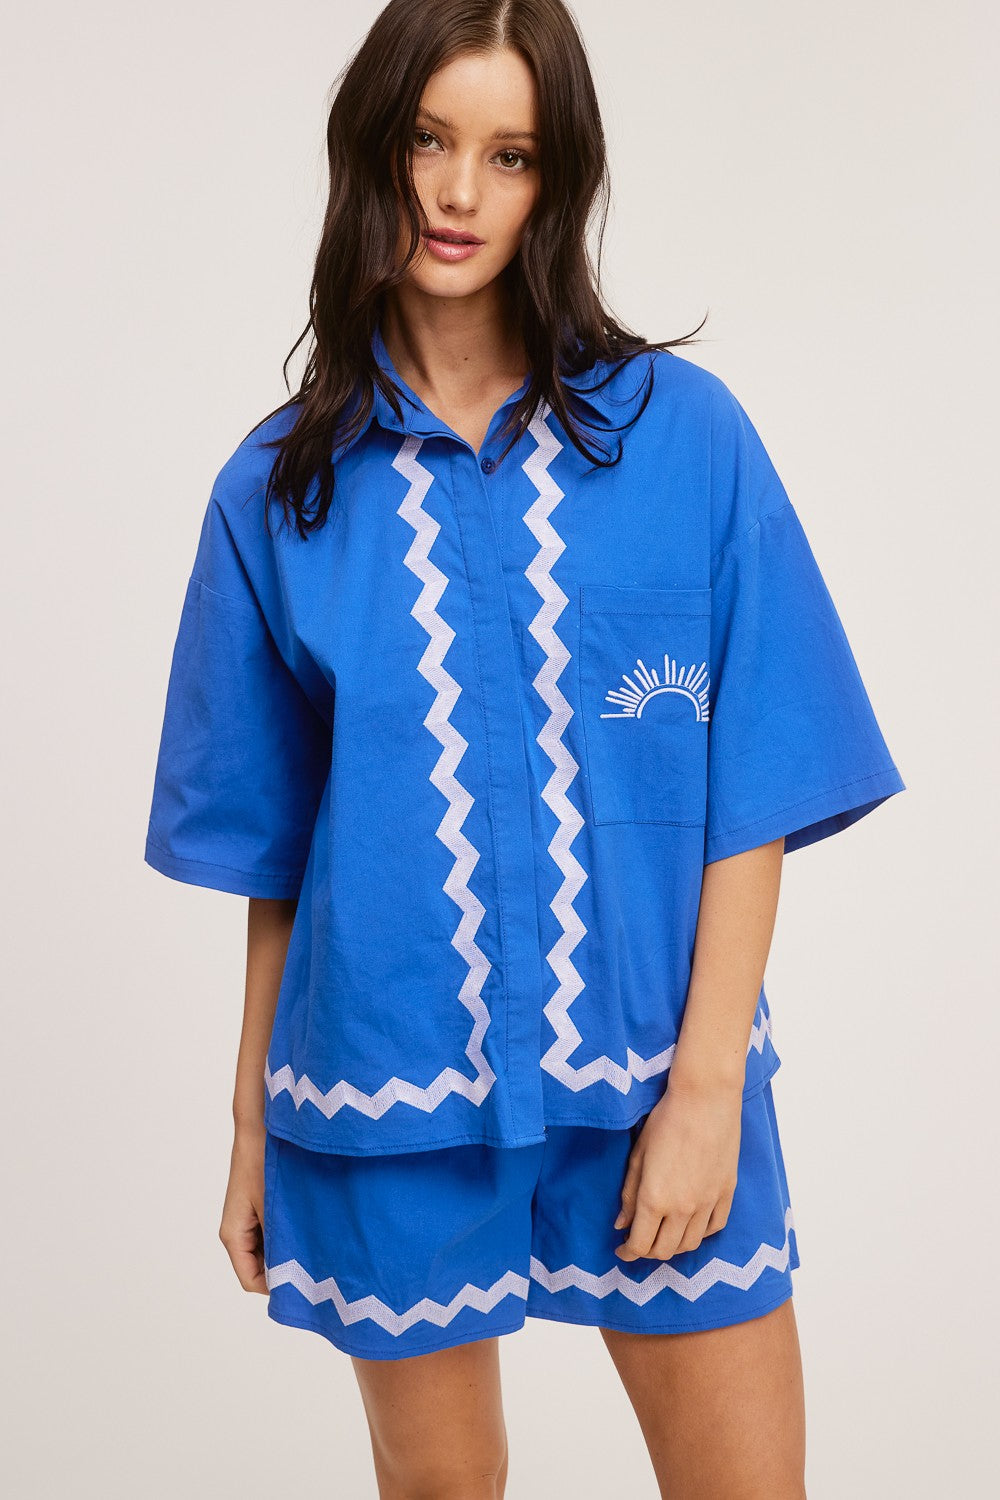 sunburst poplin shirt in royal blue-front